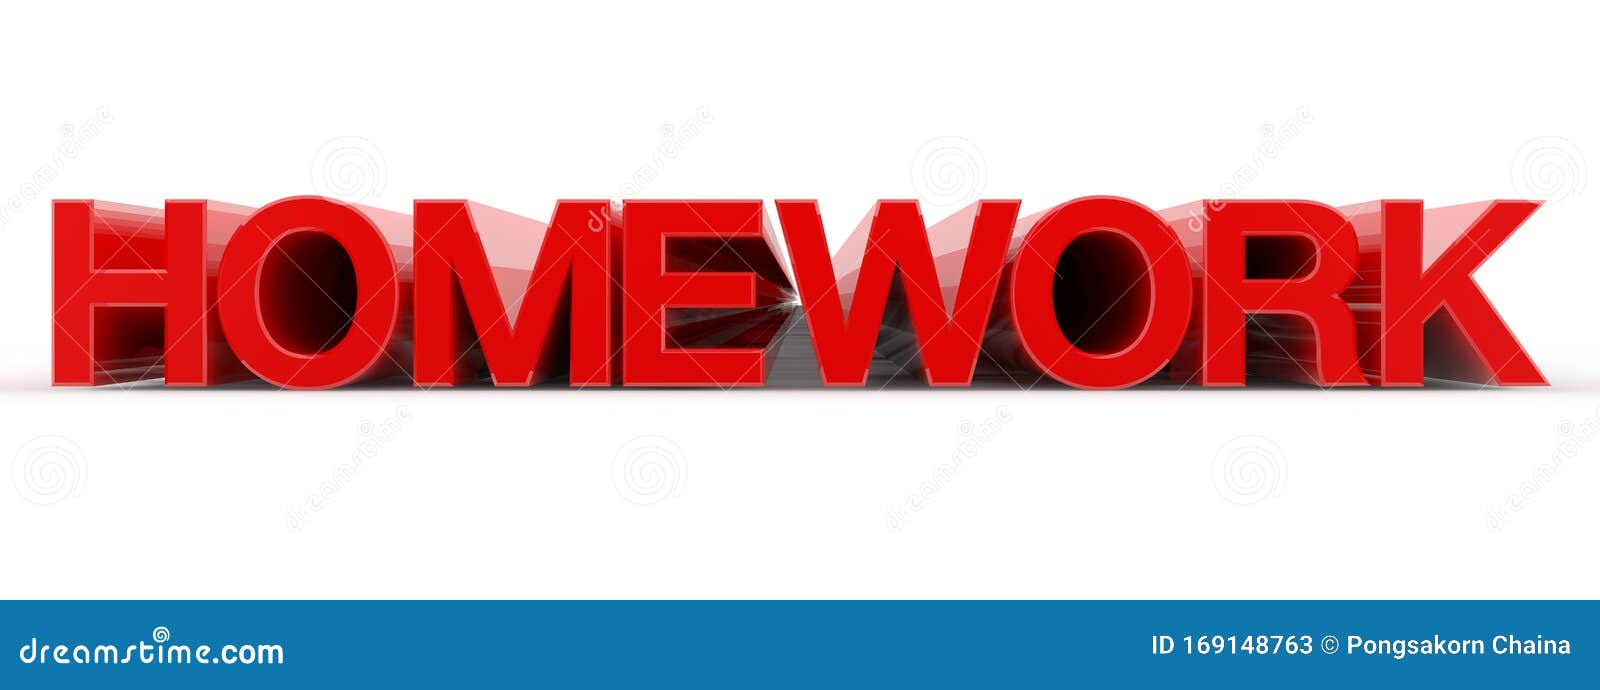 is homework a word